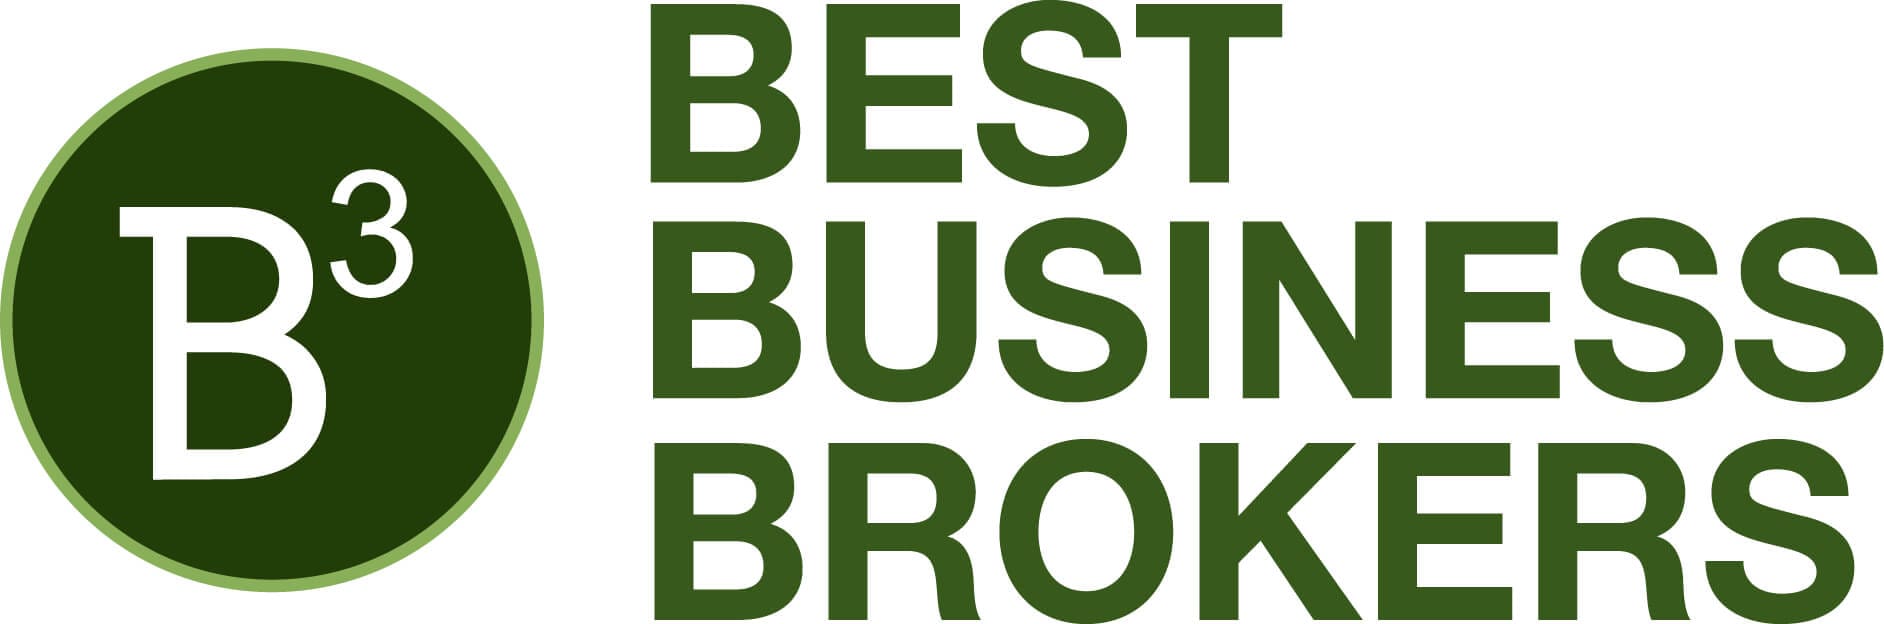 Best Business Brokers B3 Logo